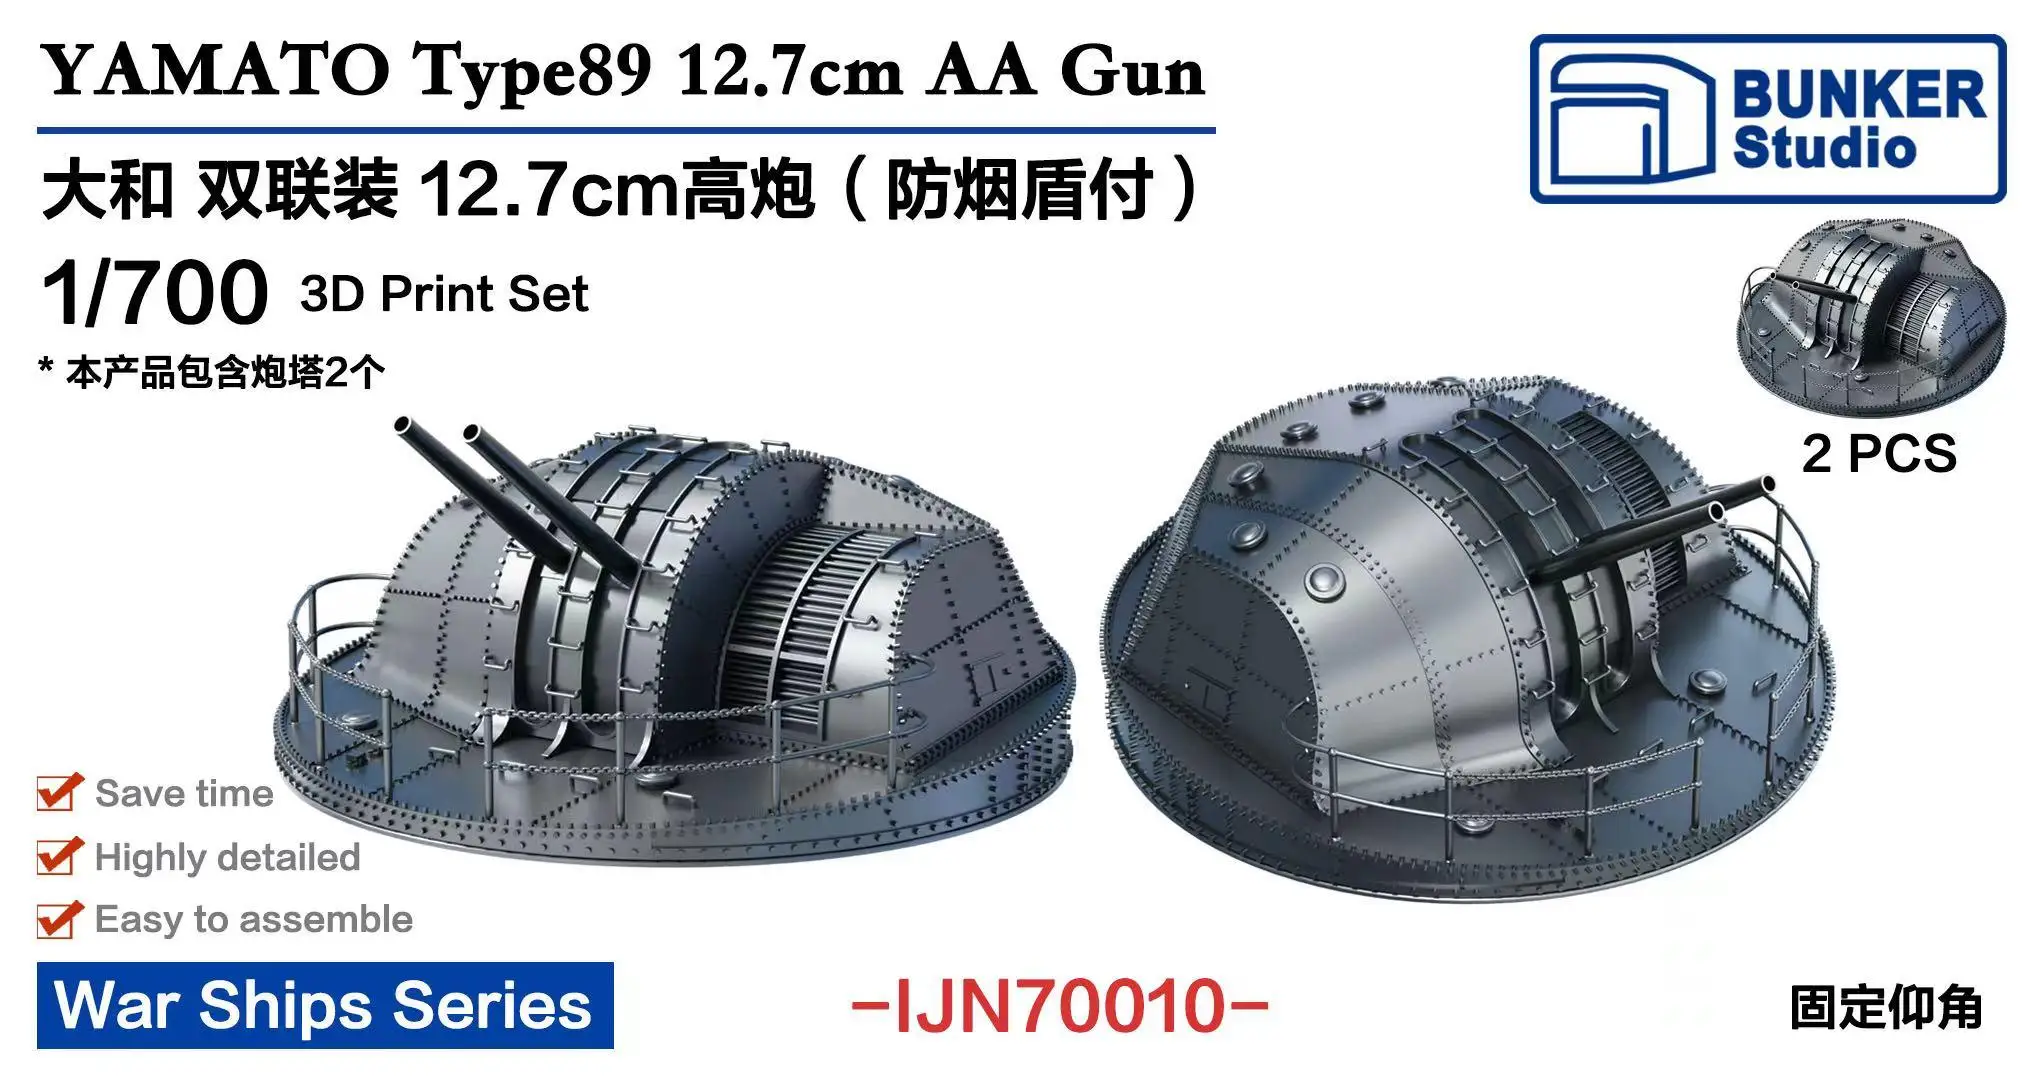 

Бункер IJN70010 масштаб 1/700 YAMATO Тип 89 12,7 см AA пистолет 2 шт. набор 3D печати